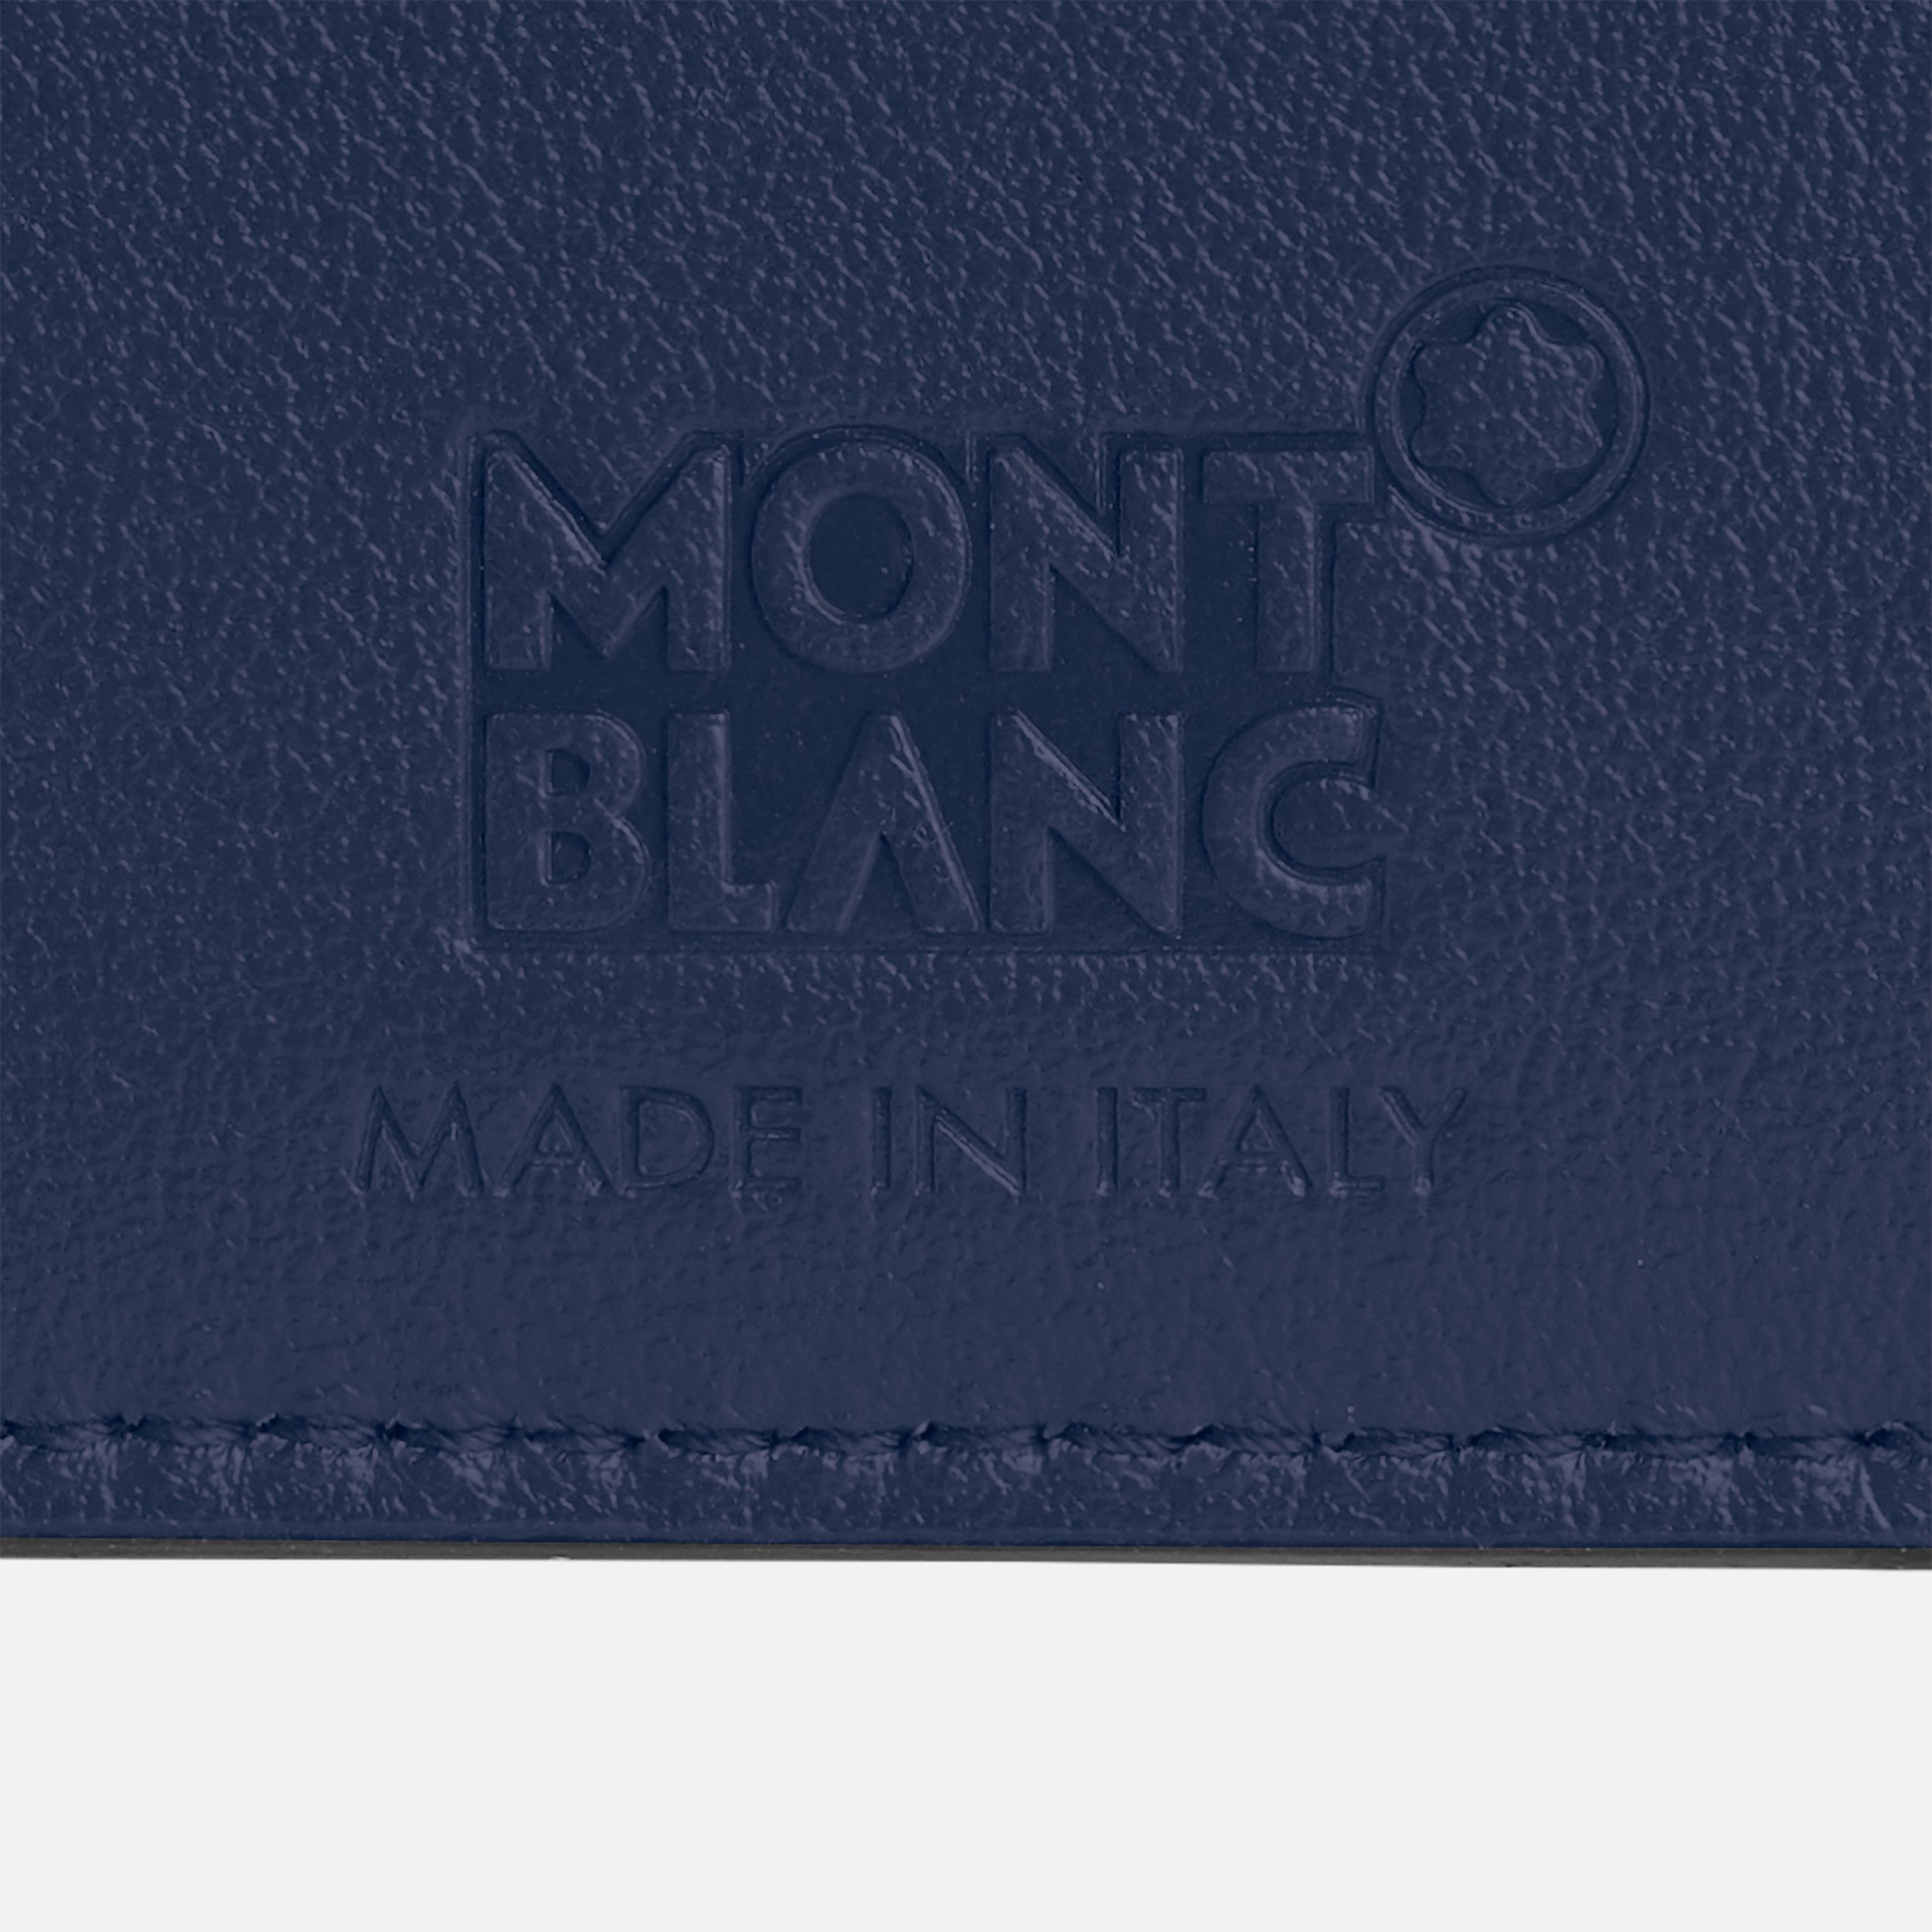 Montblanc - MEISTERSTÜCK - Card Holder 8cc Blue with zipped pocket